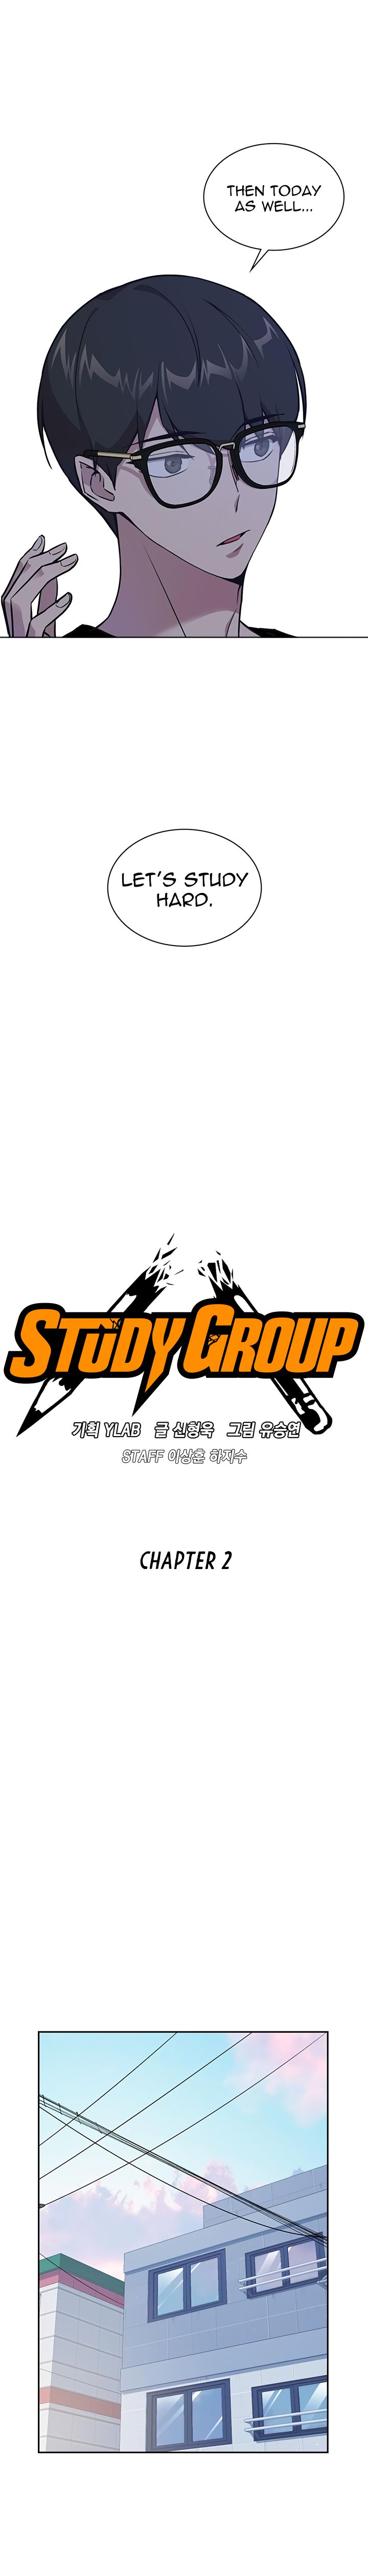 study_group_2_8